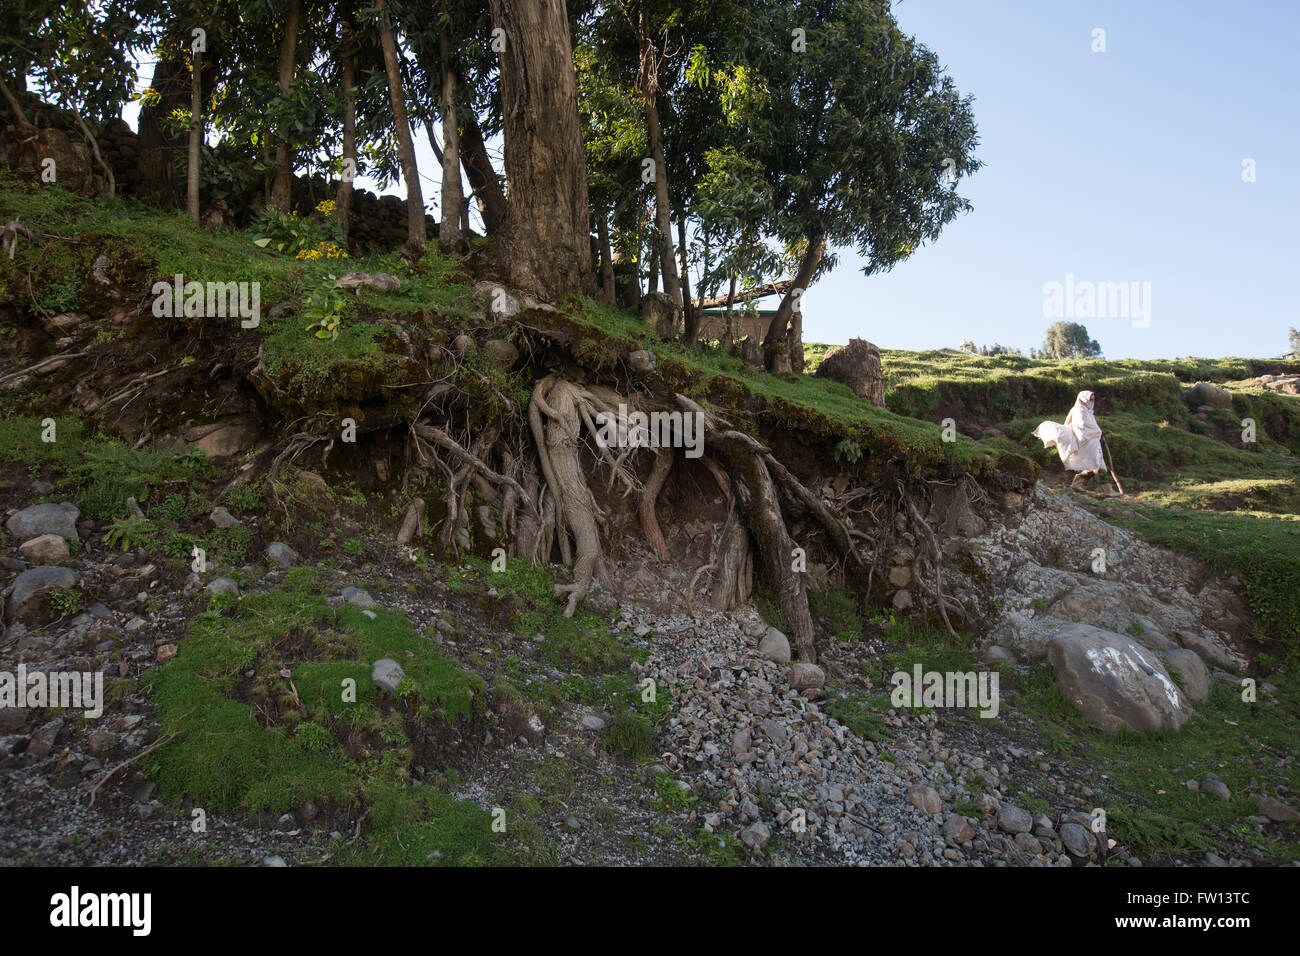 Furamariam village, Debele, Amhara, Ethiopie, Octobre 2013 : Juniper tree root du système exposé par l'érosion des sols. Banque D'Images